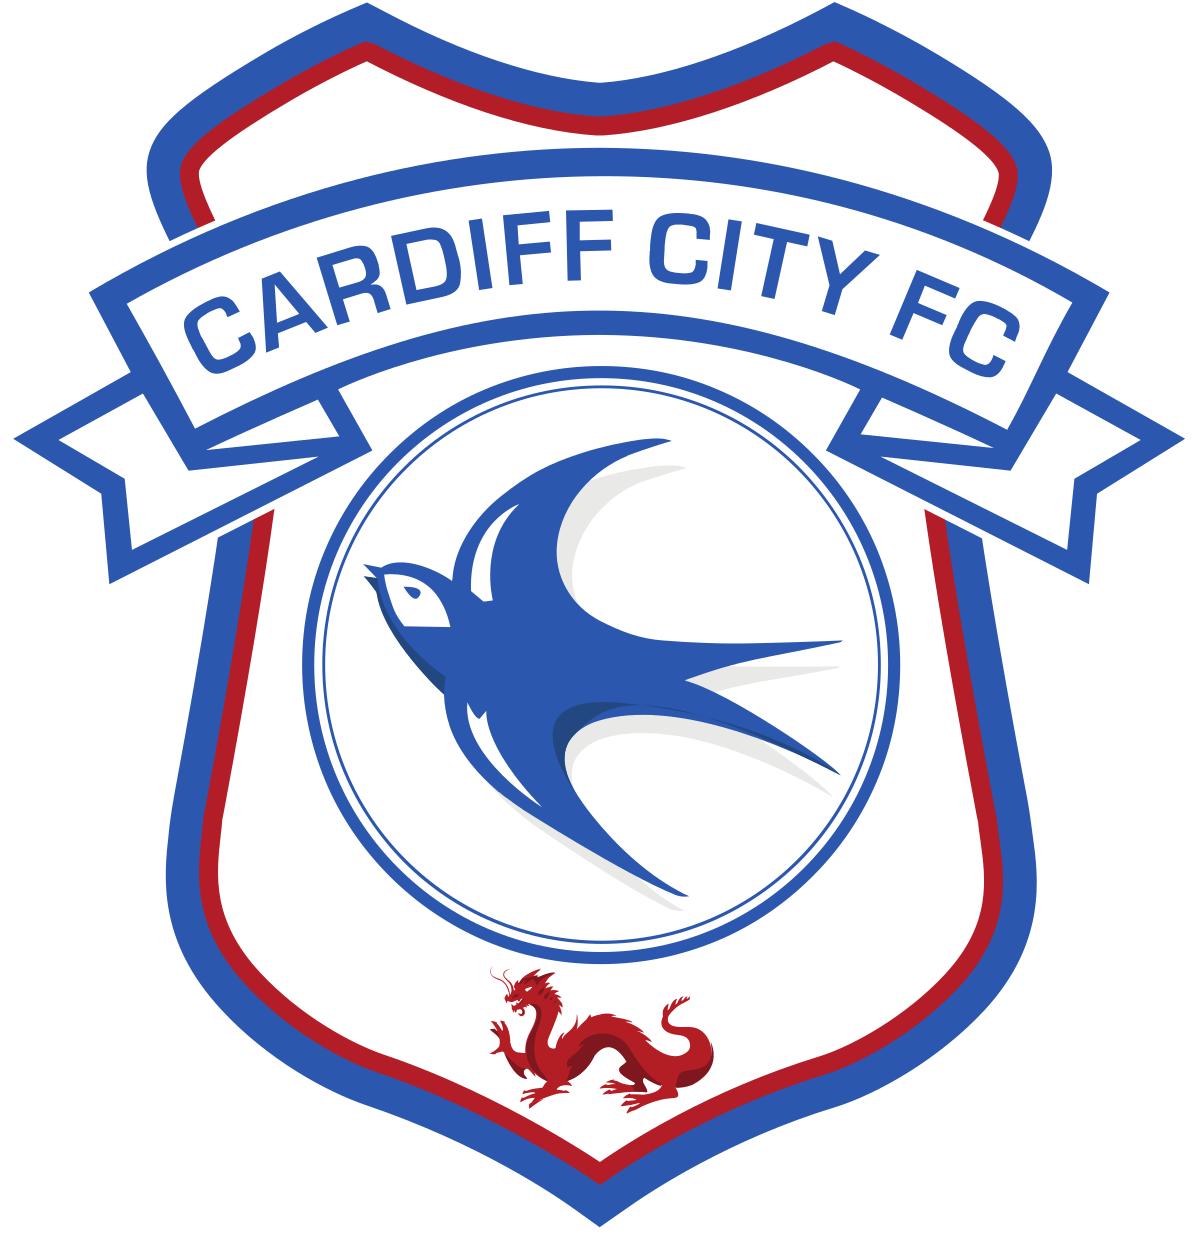 For Red Blue Orange Football Logo - Cardiff City F.C.